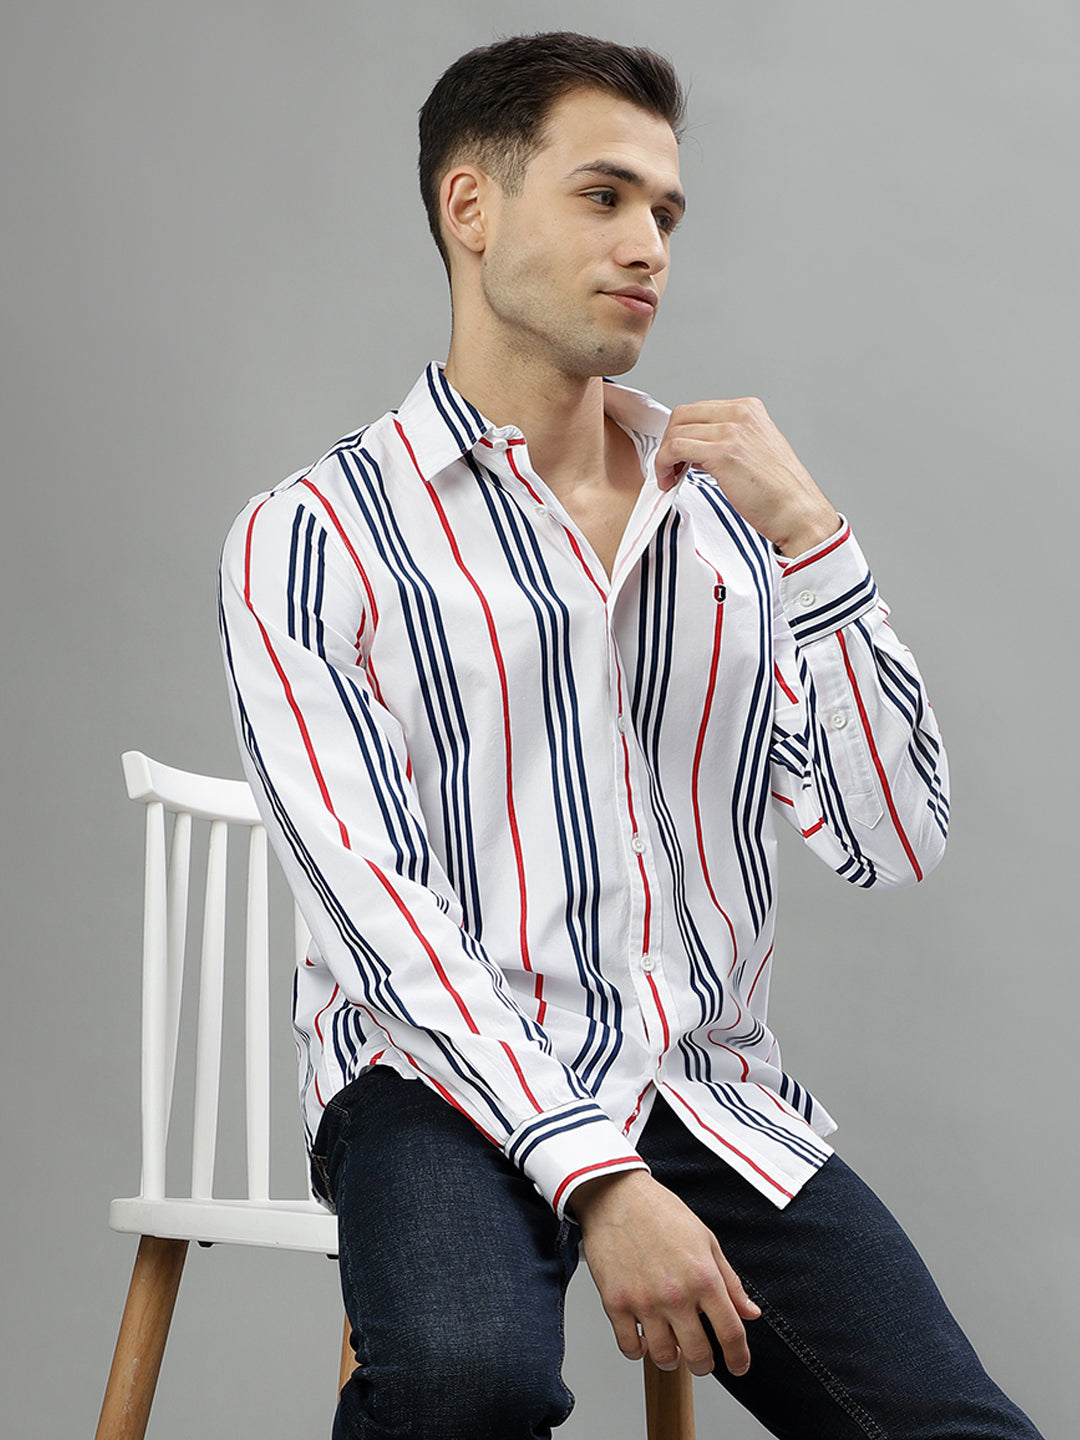 Iconic Multi Striped Regular Fit Shirt